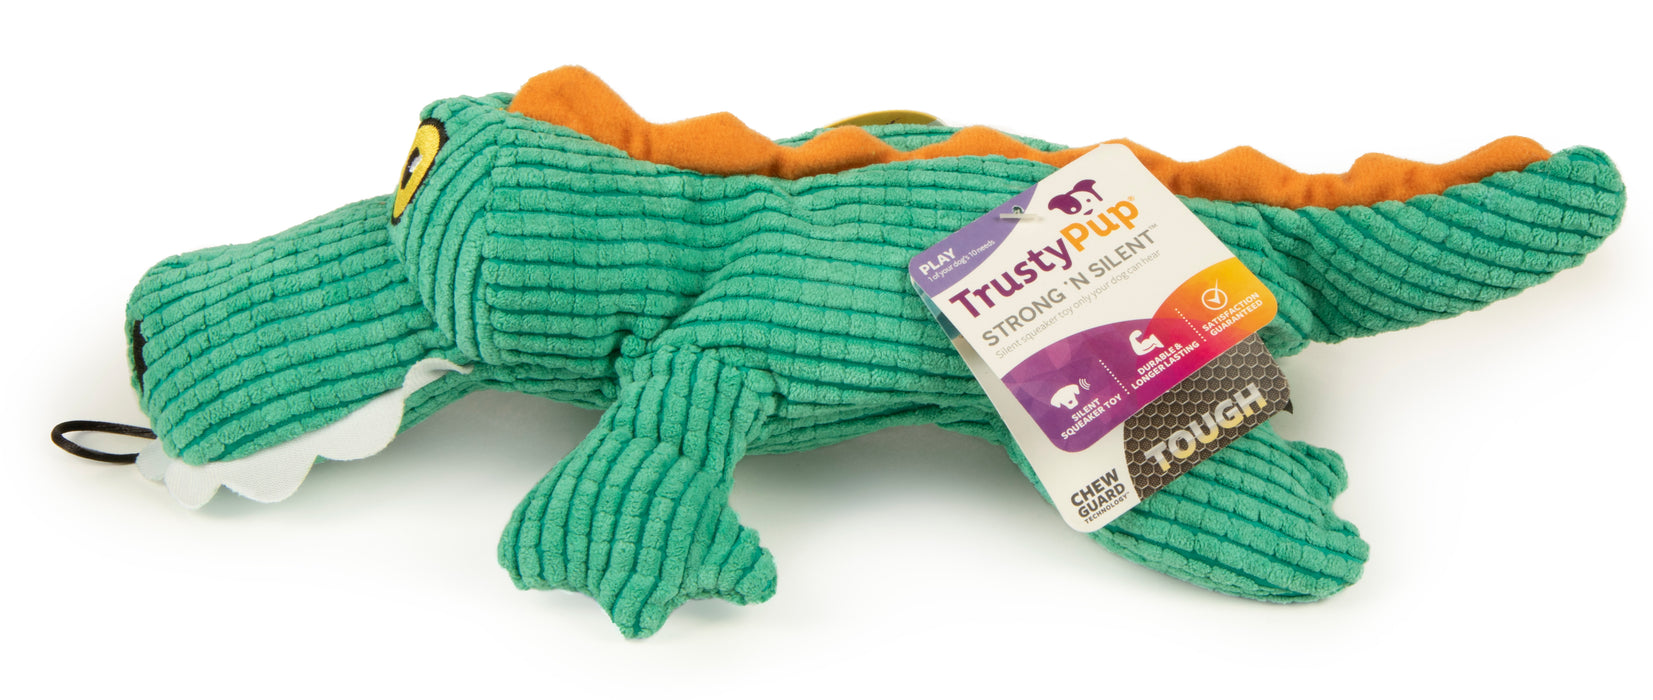 TrustyPup - Silent Squeak Penguin Soft Plush Dog Toy